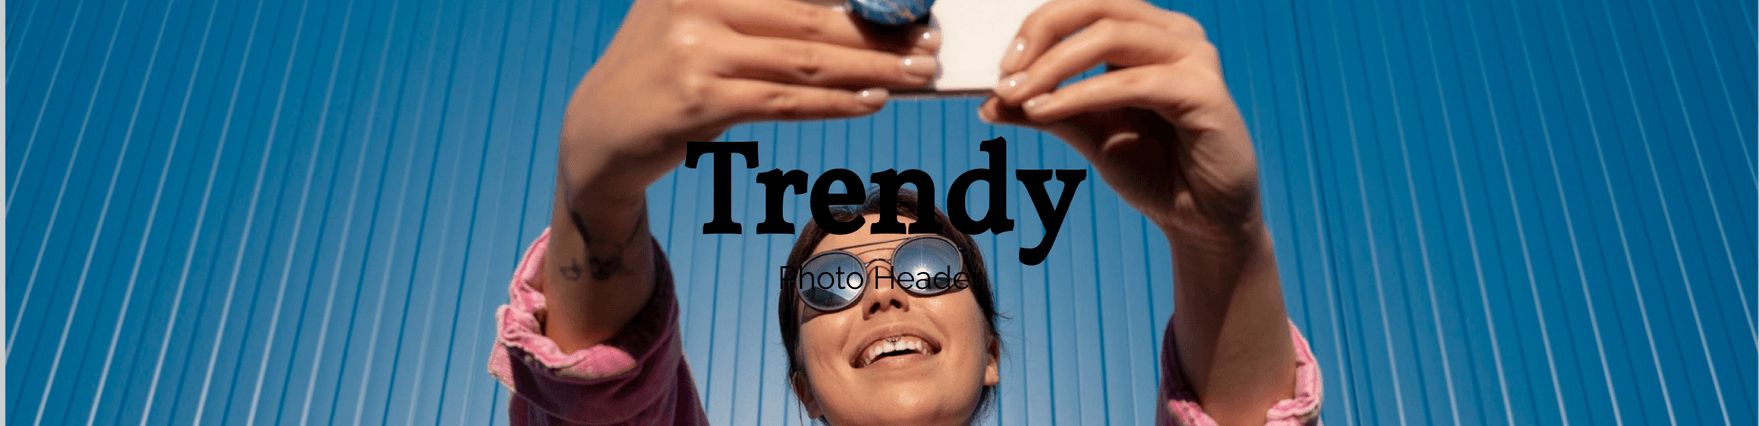 Trendy Photo Header Template